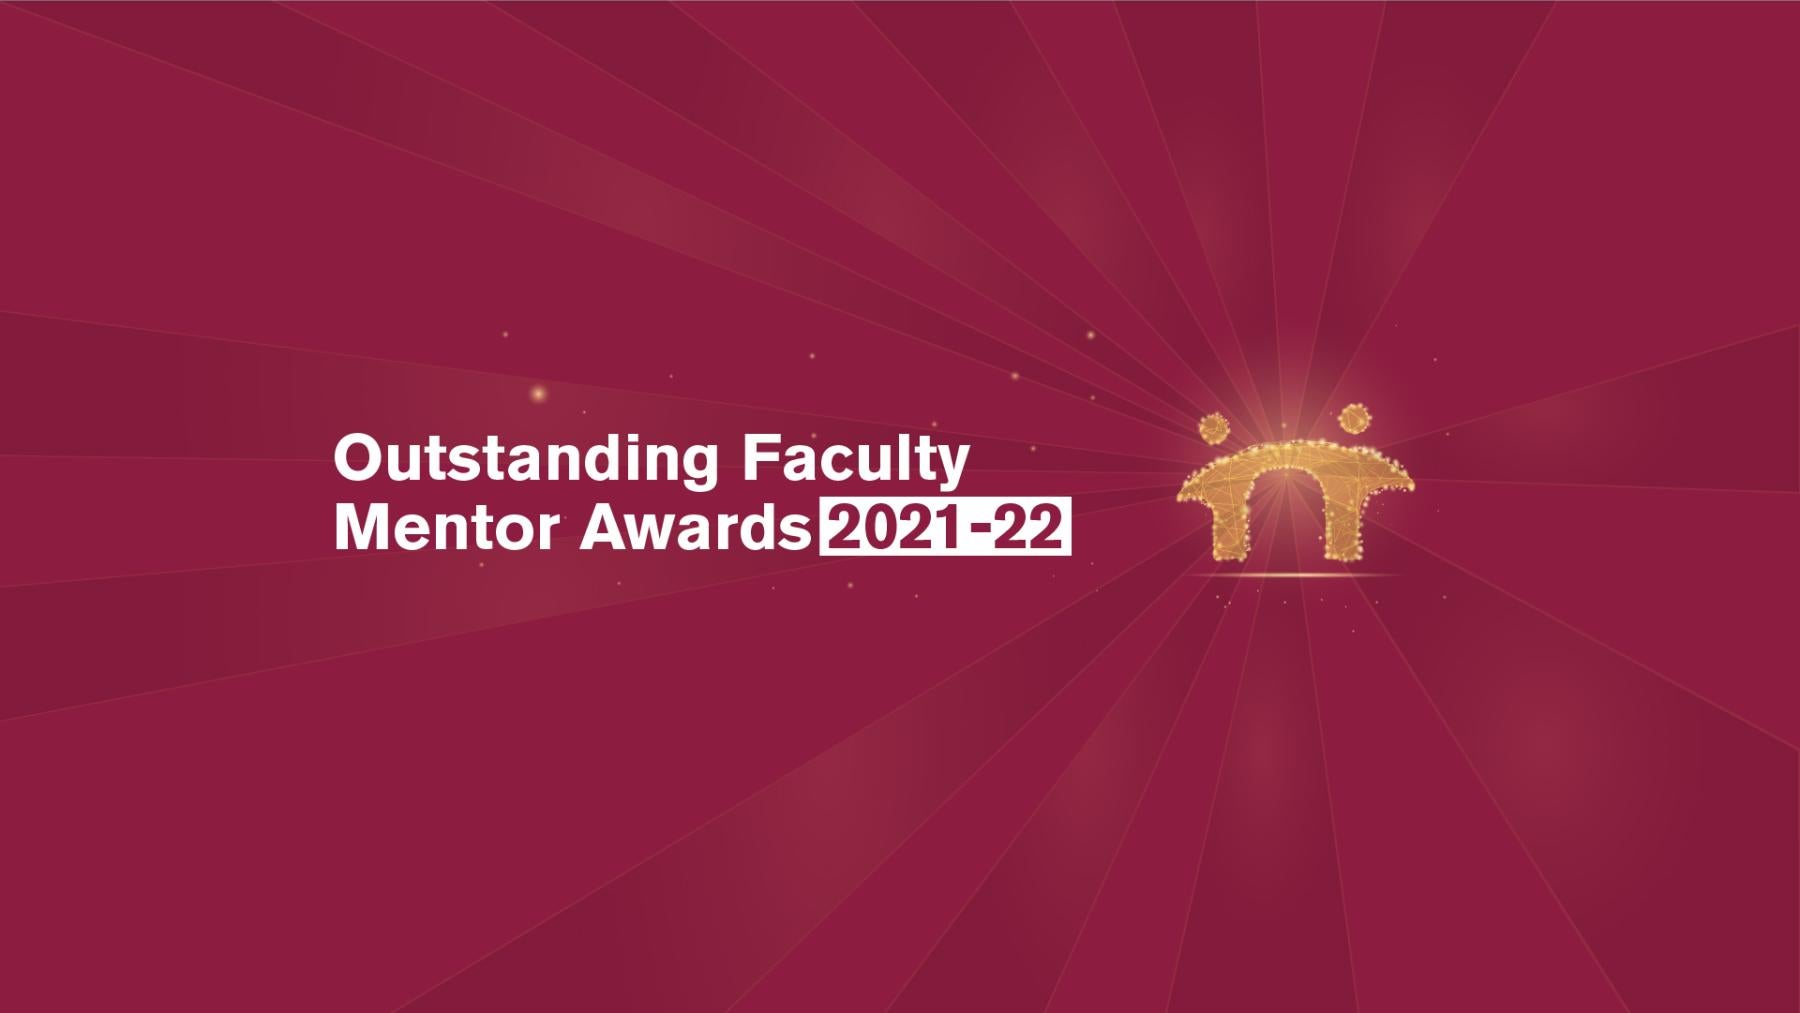 Outstanding Faculty Mentor Awards 2021-22